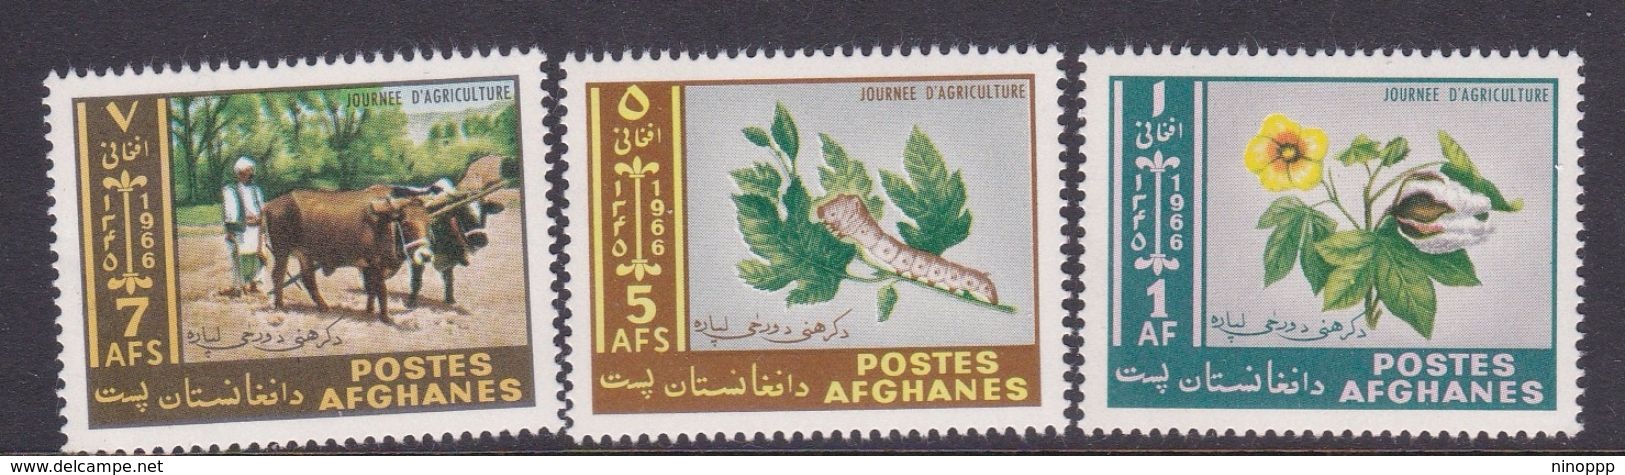 Afghanistan SG 564-566 1966 Agricultural Day MNH - Afganistán